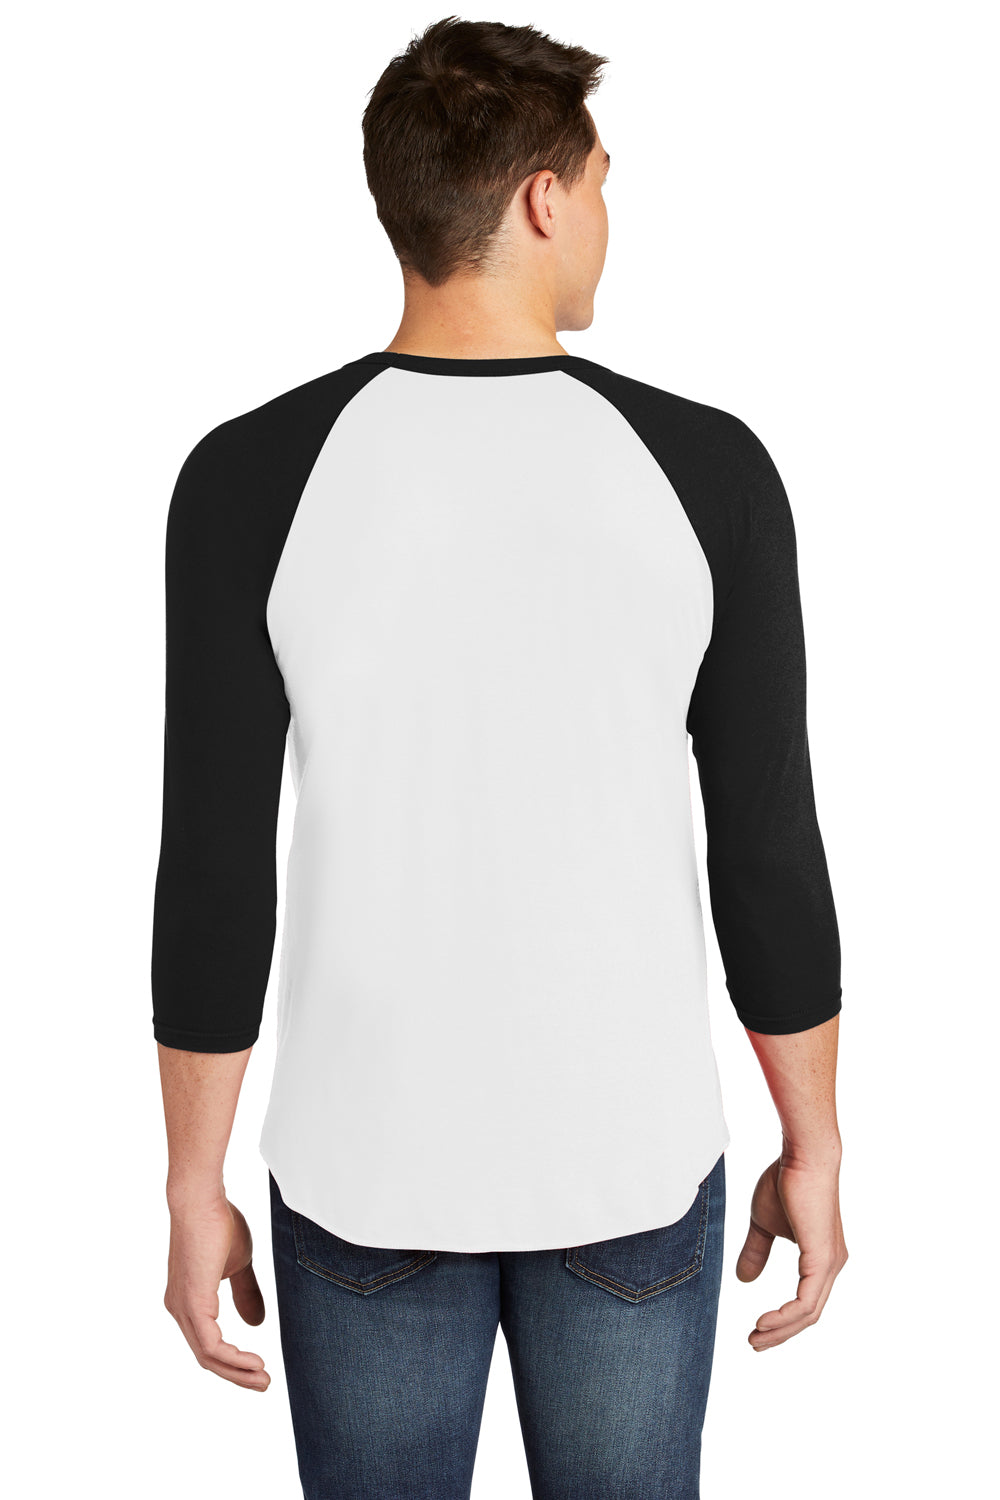 American Apparel BB453W Mens 3/4 Sleeve Crewneck T-Shirt White/Black Back